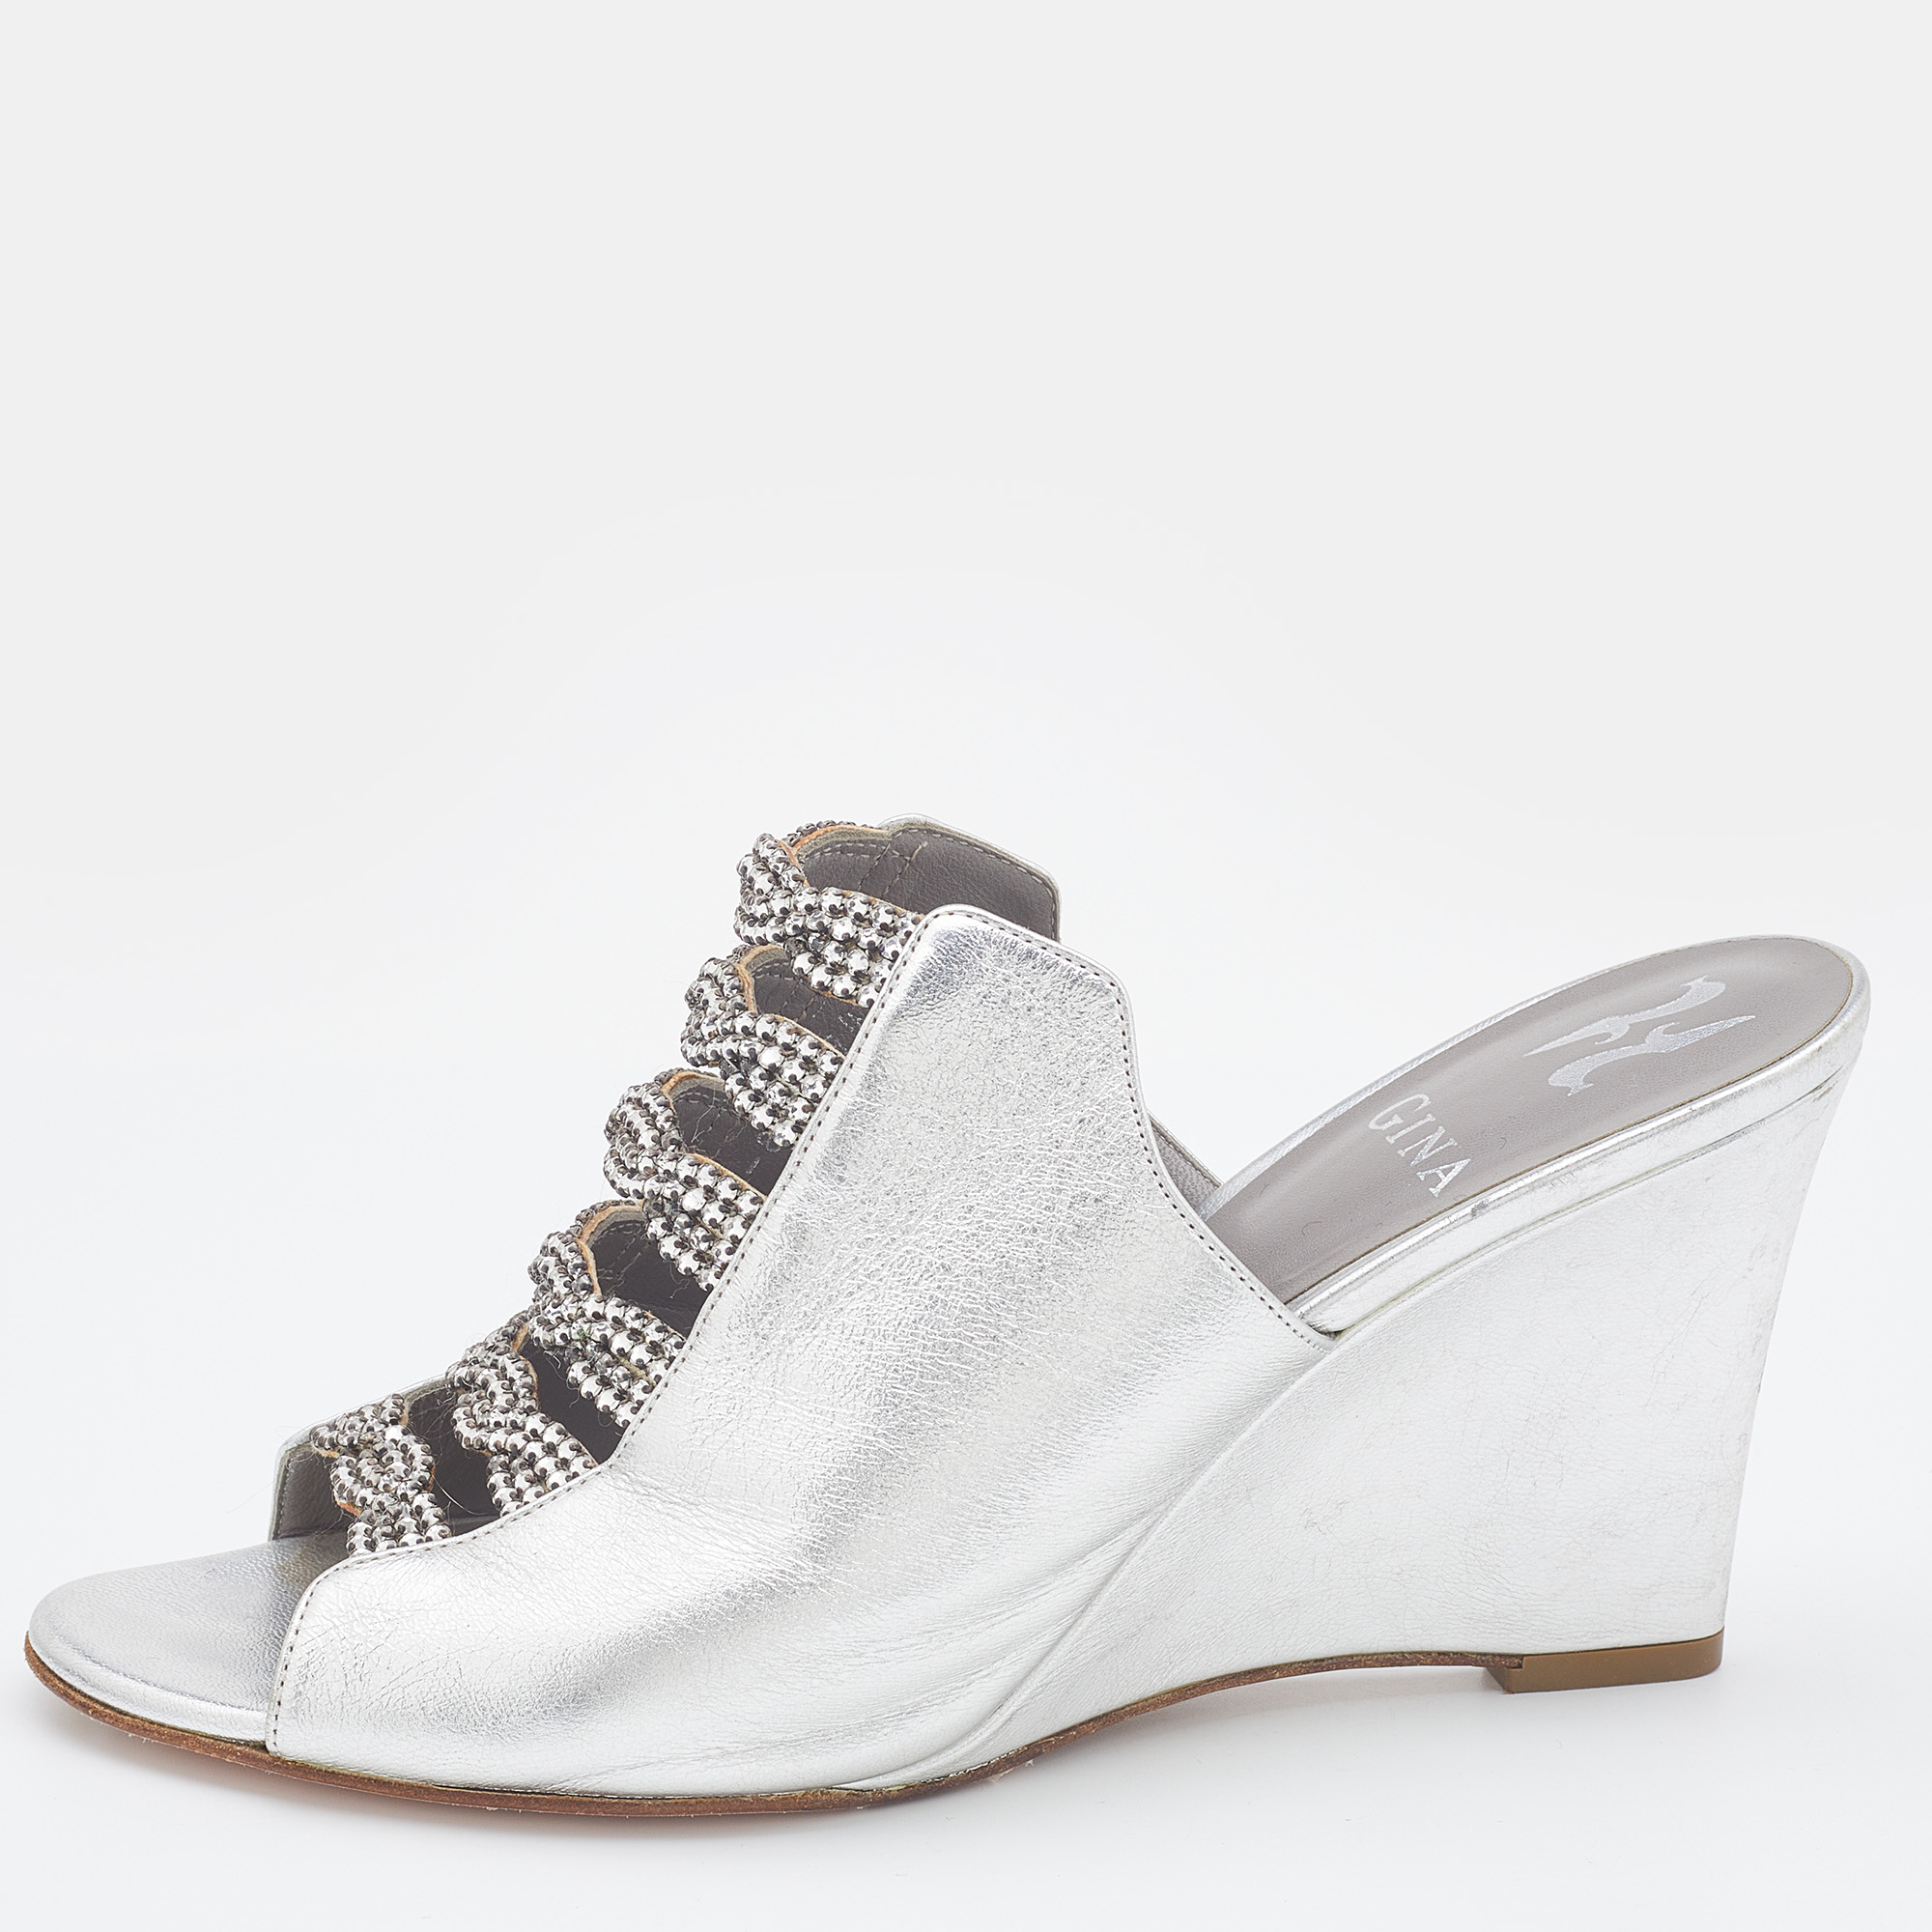 Gina Silver Leather Crystal Embellished Wedge Sandals Size 39